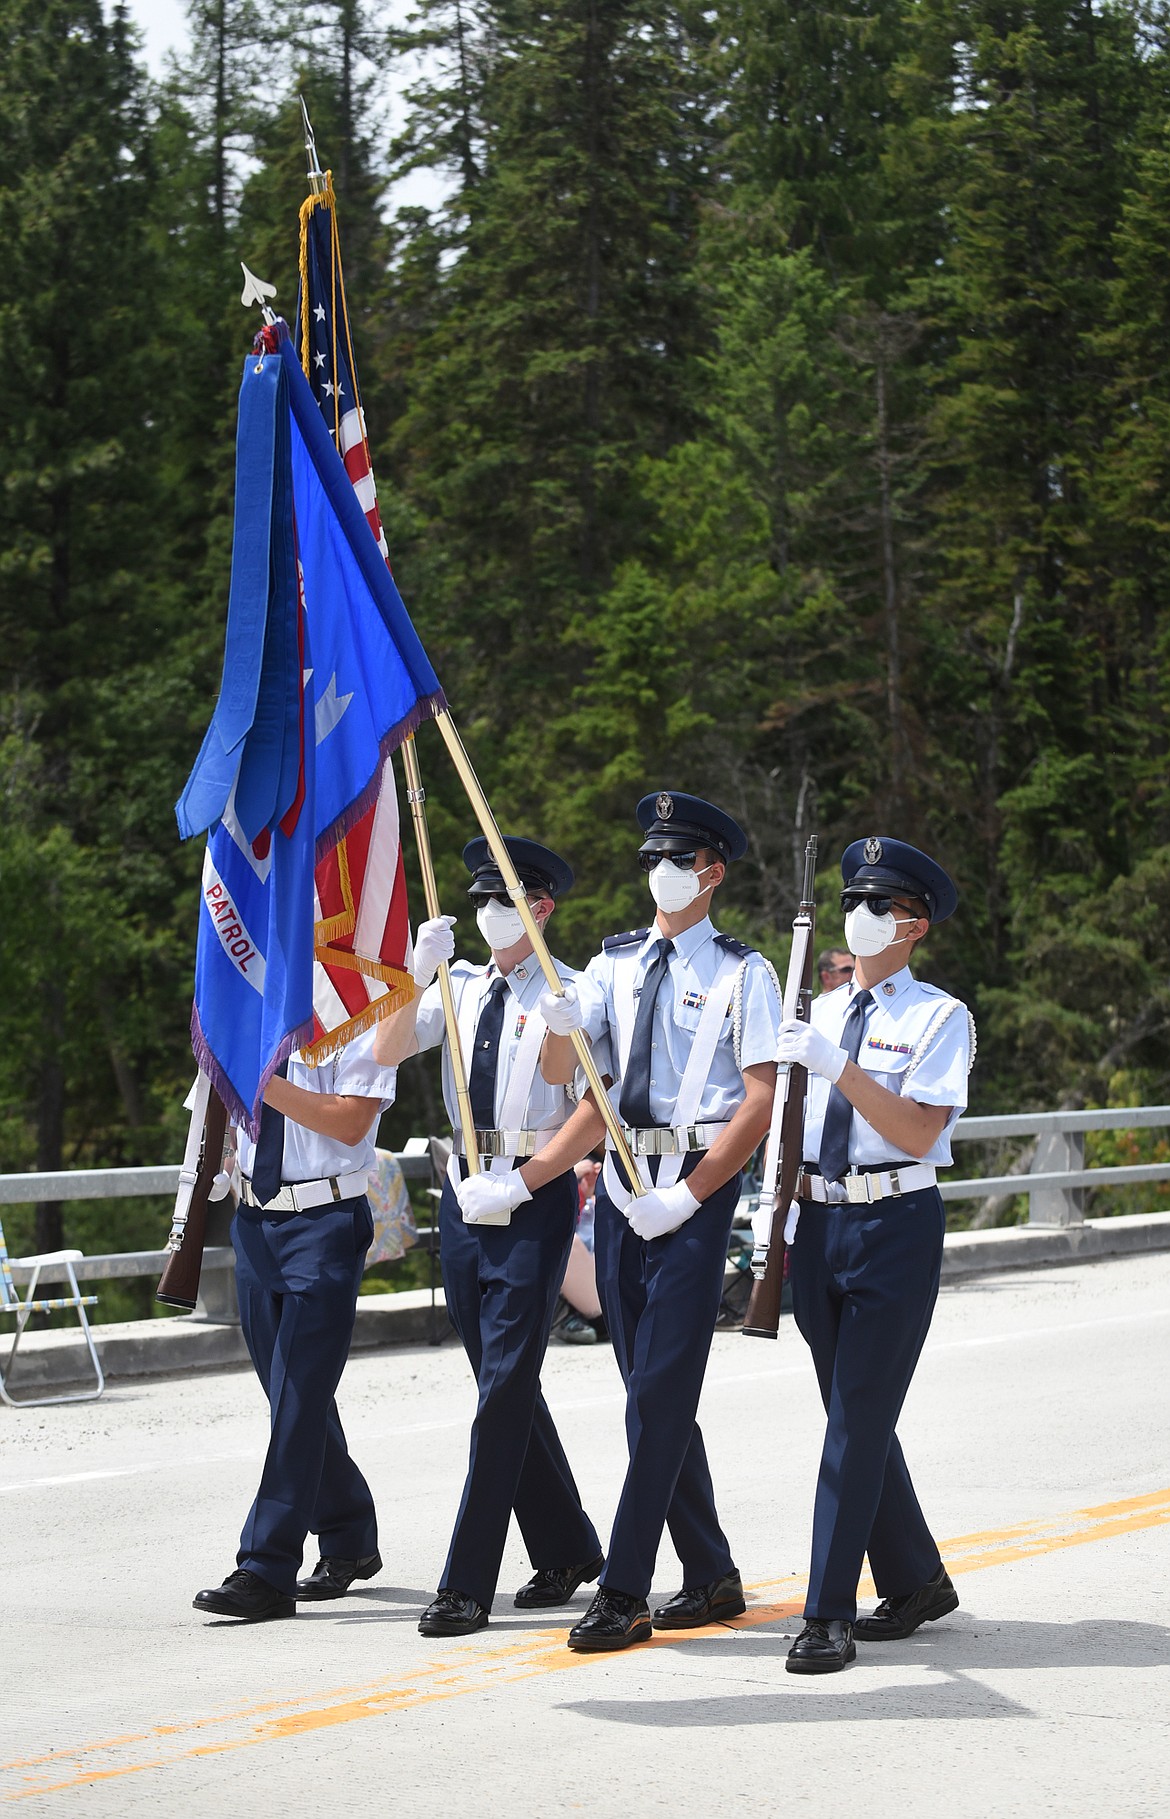 Members of the Civil Air Patrol Color Guard parade down Montana 209 in Ferndale.